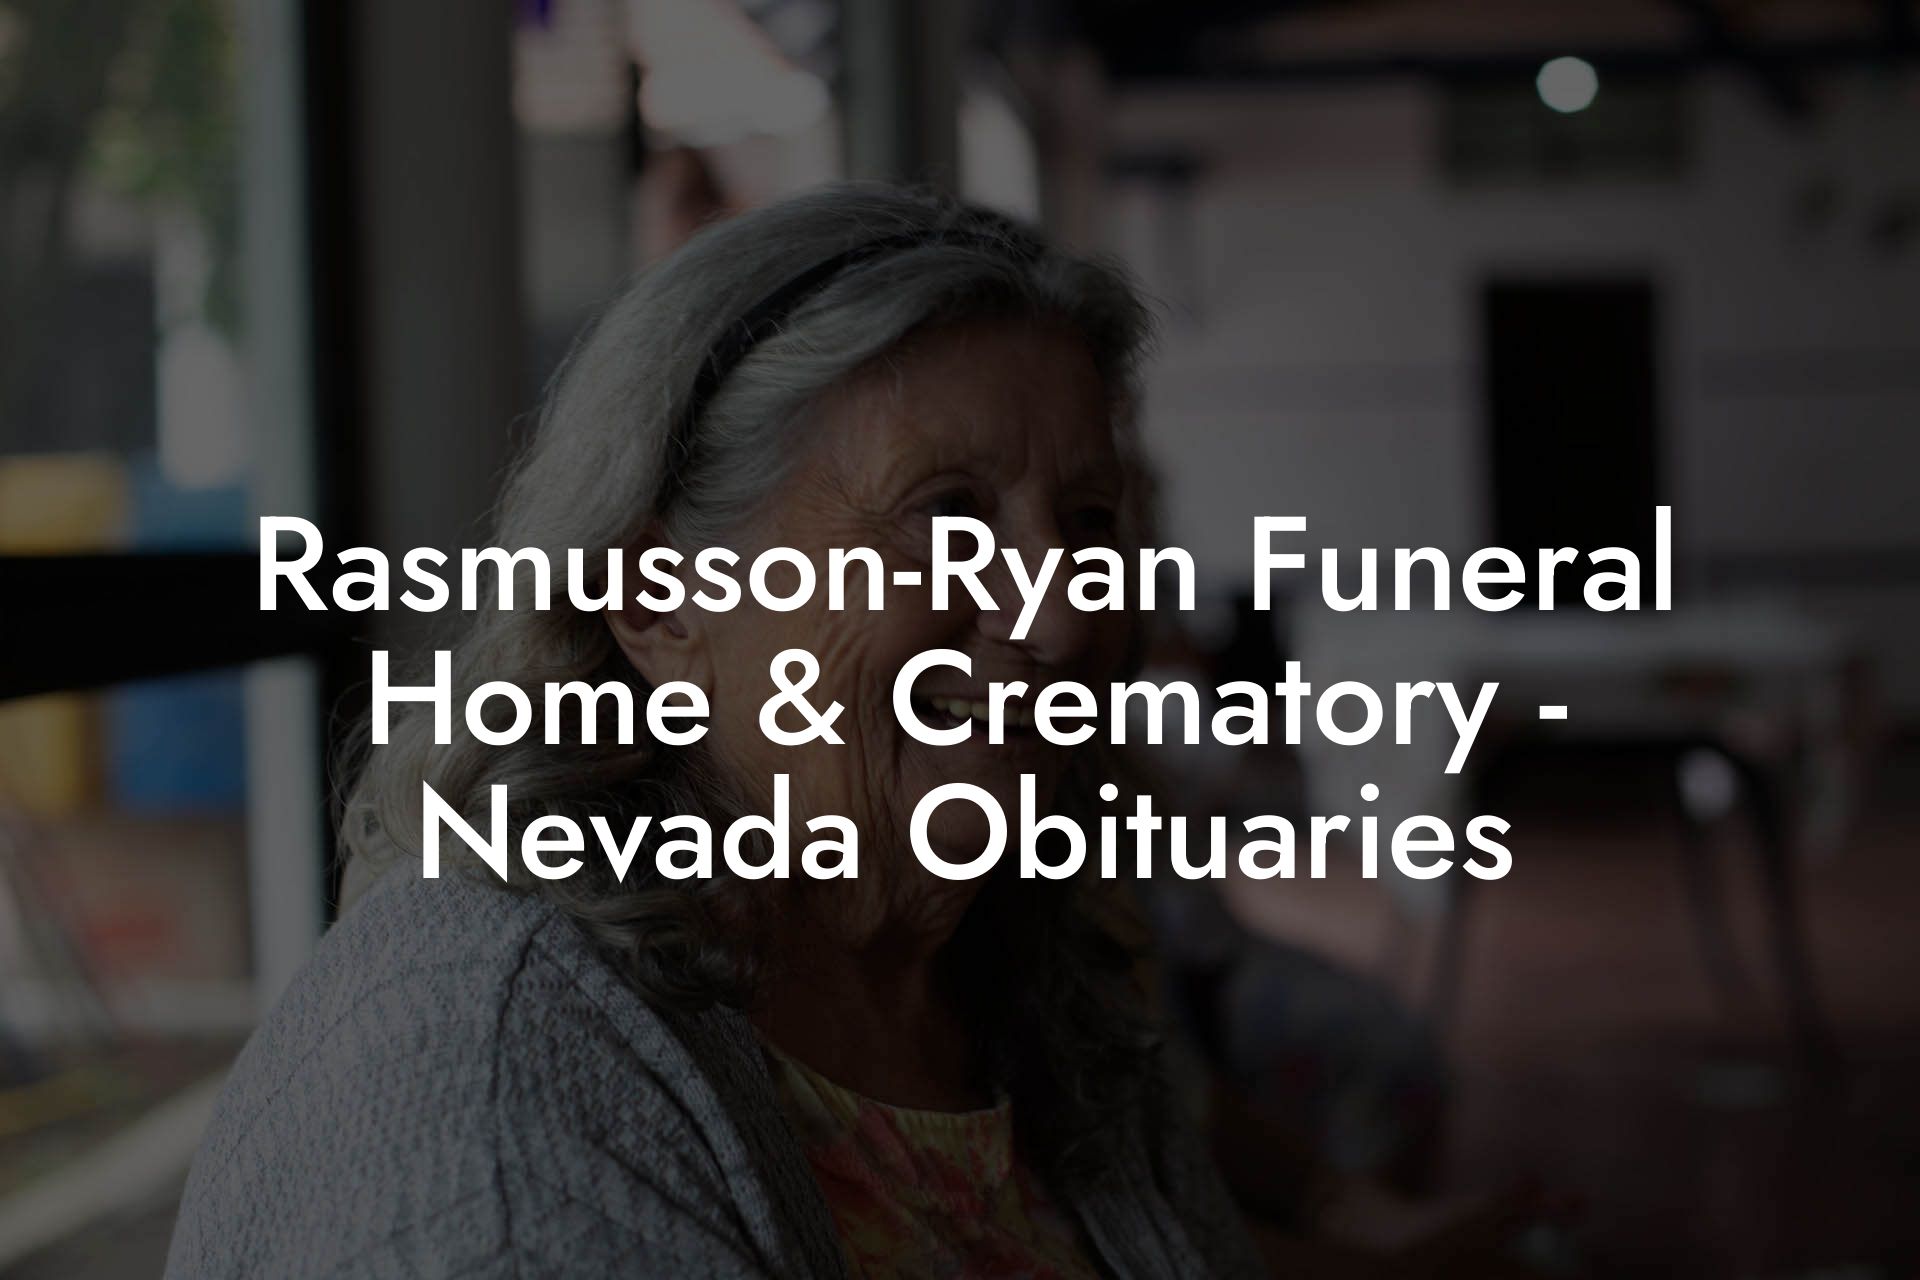 Rasmusson-Ryan Funeral Home & Crematory - Nevada Obituaries